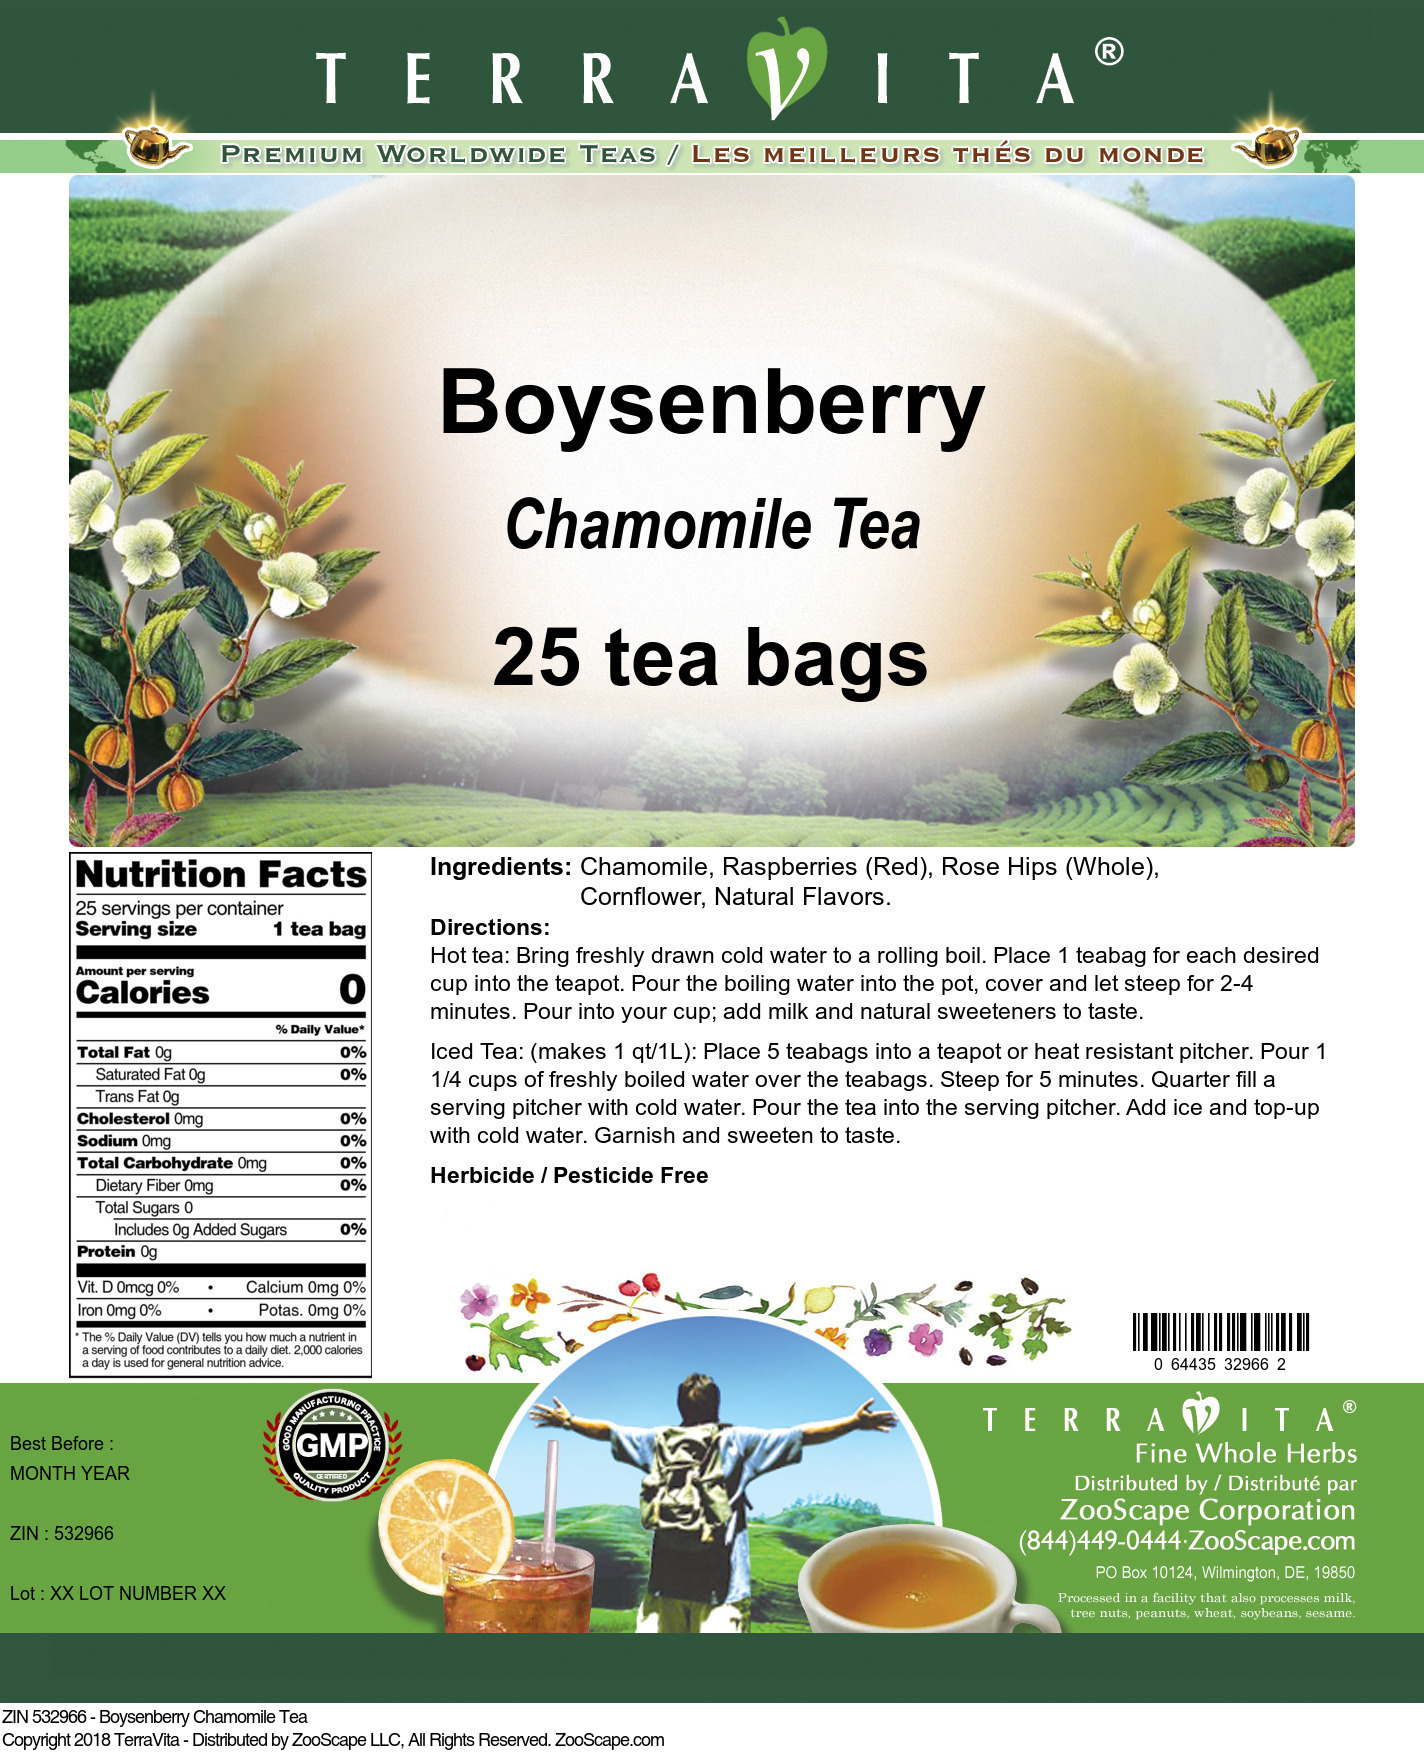 Boysenberry Chamomile Tea - Label